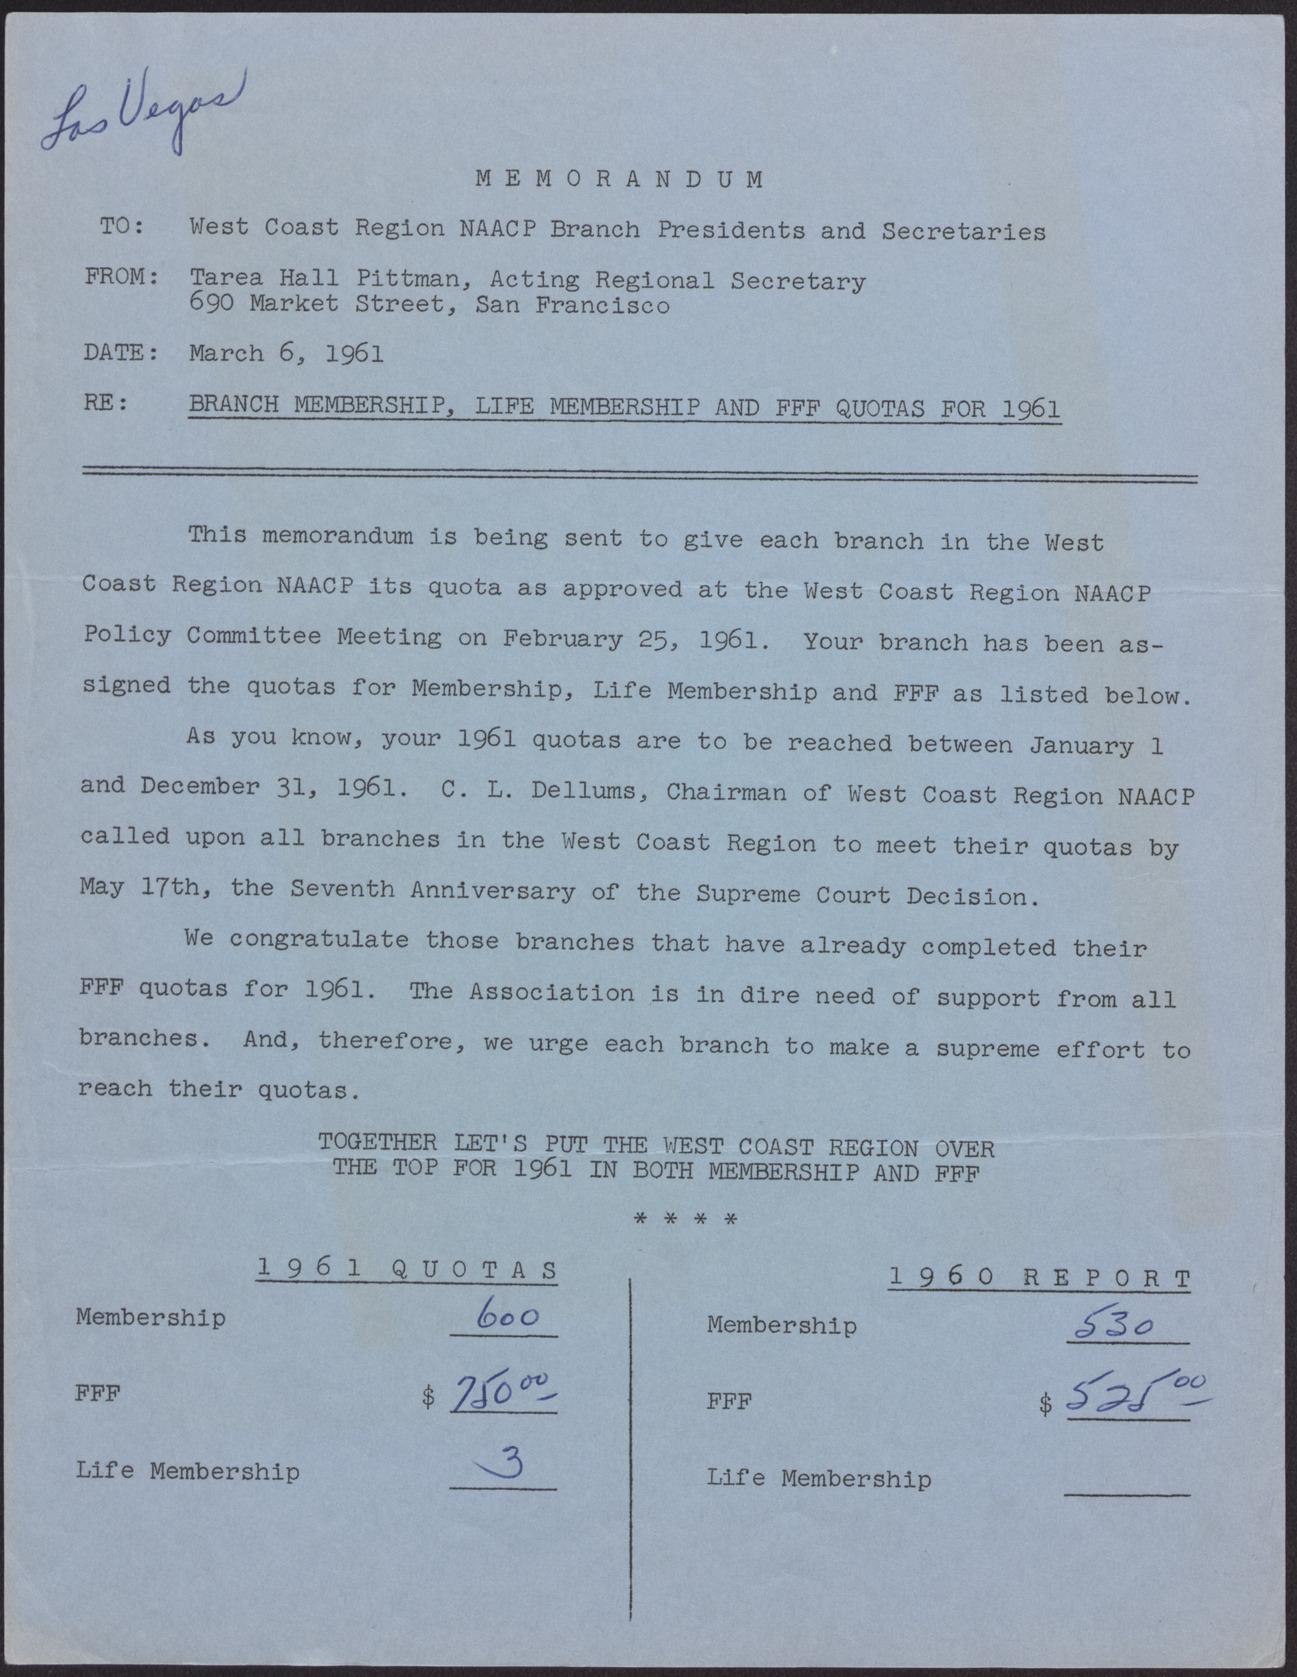 Memorandum to West Coast Region Branch Presidents and Secretaries from Tarea Hall Pittman, March 6, 1961